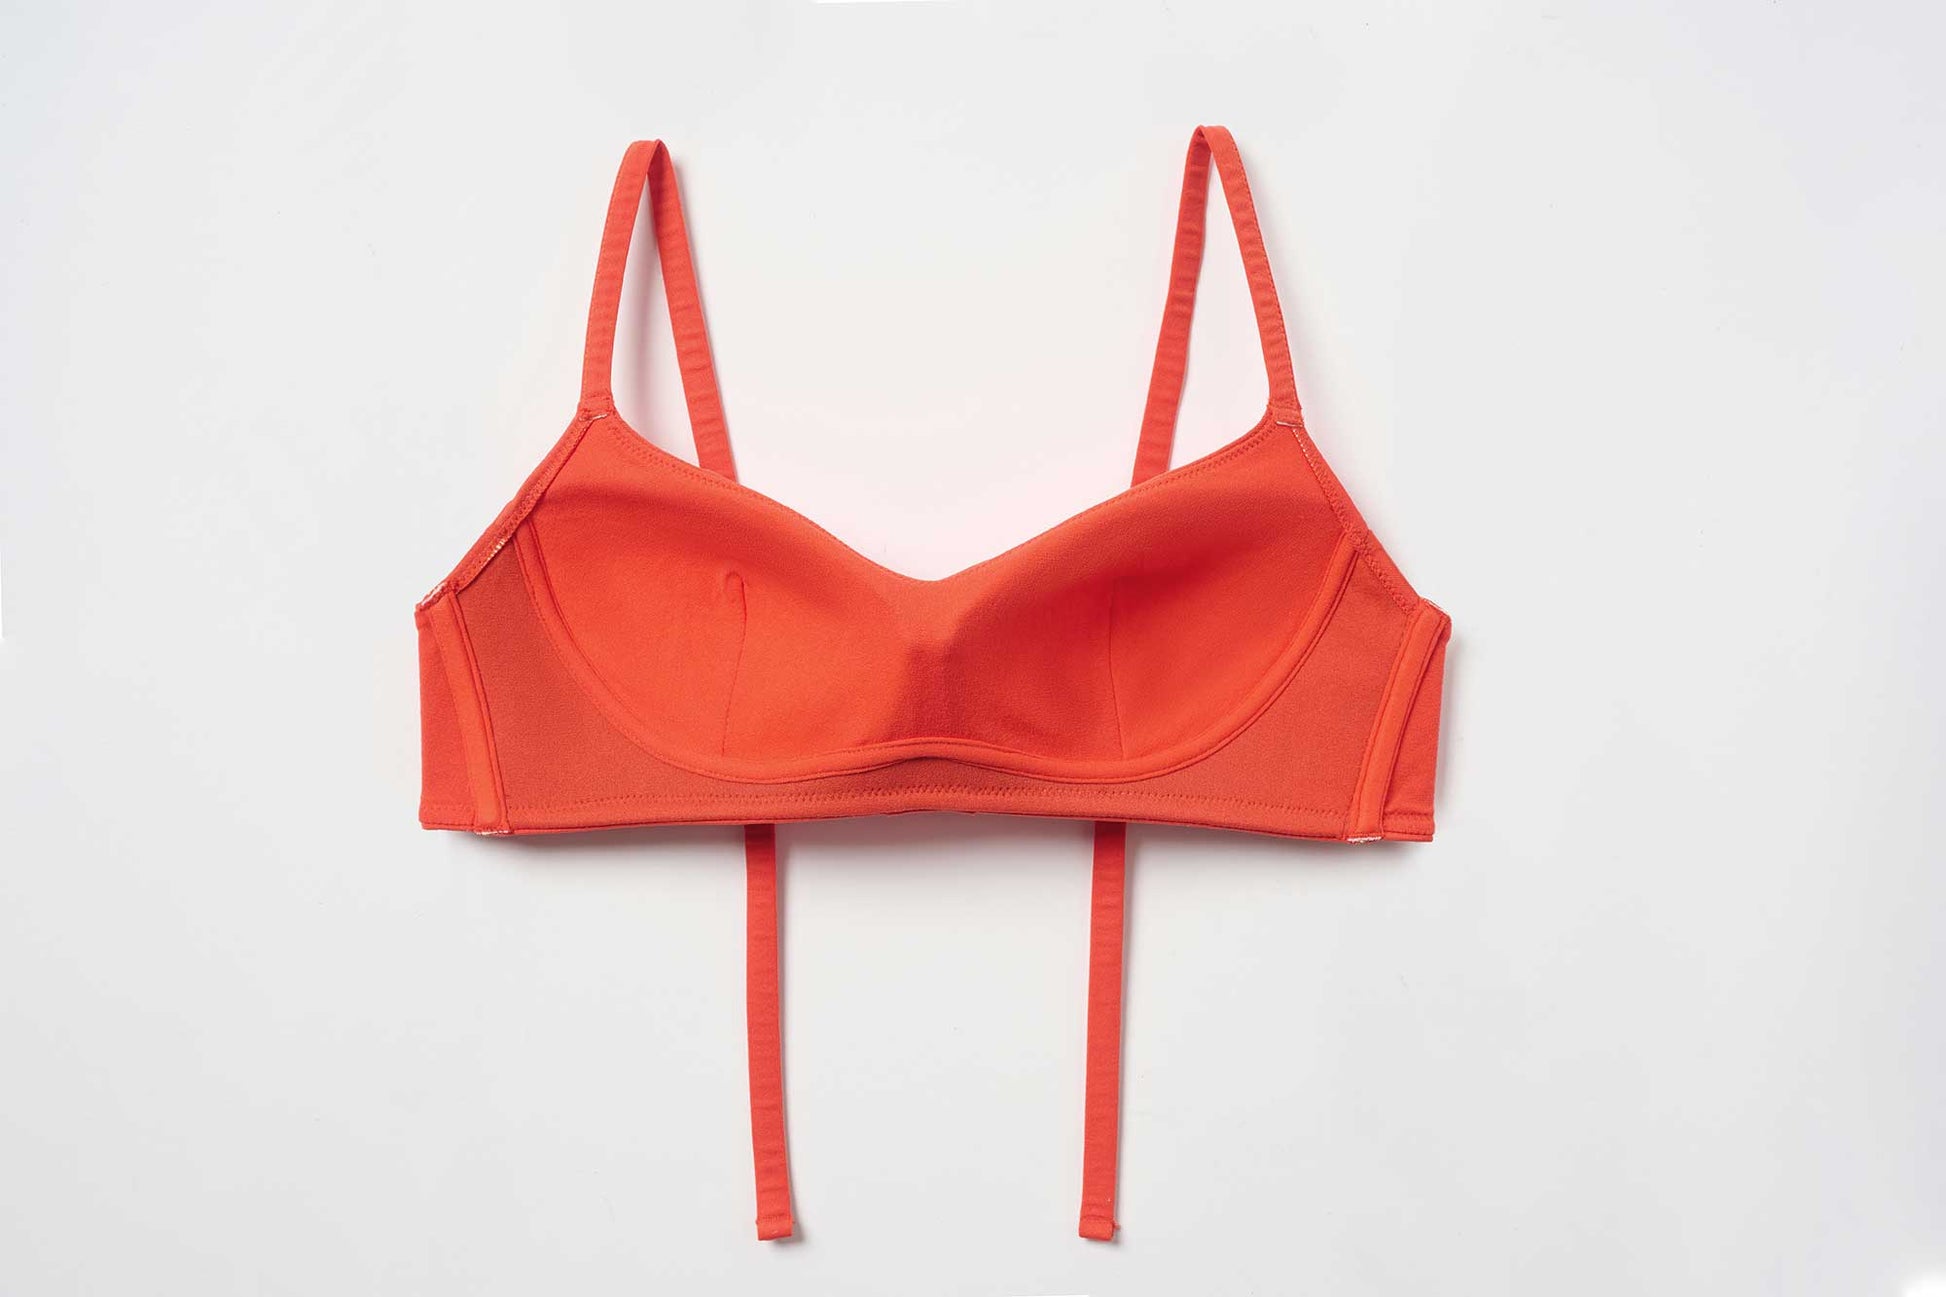 inside of orange bikini top